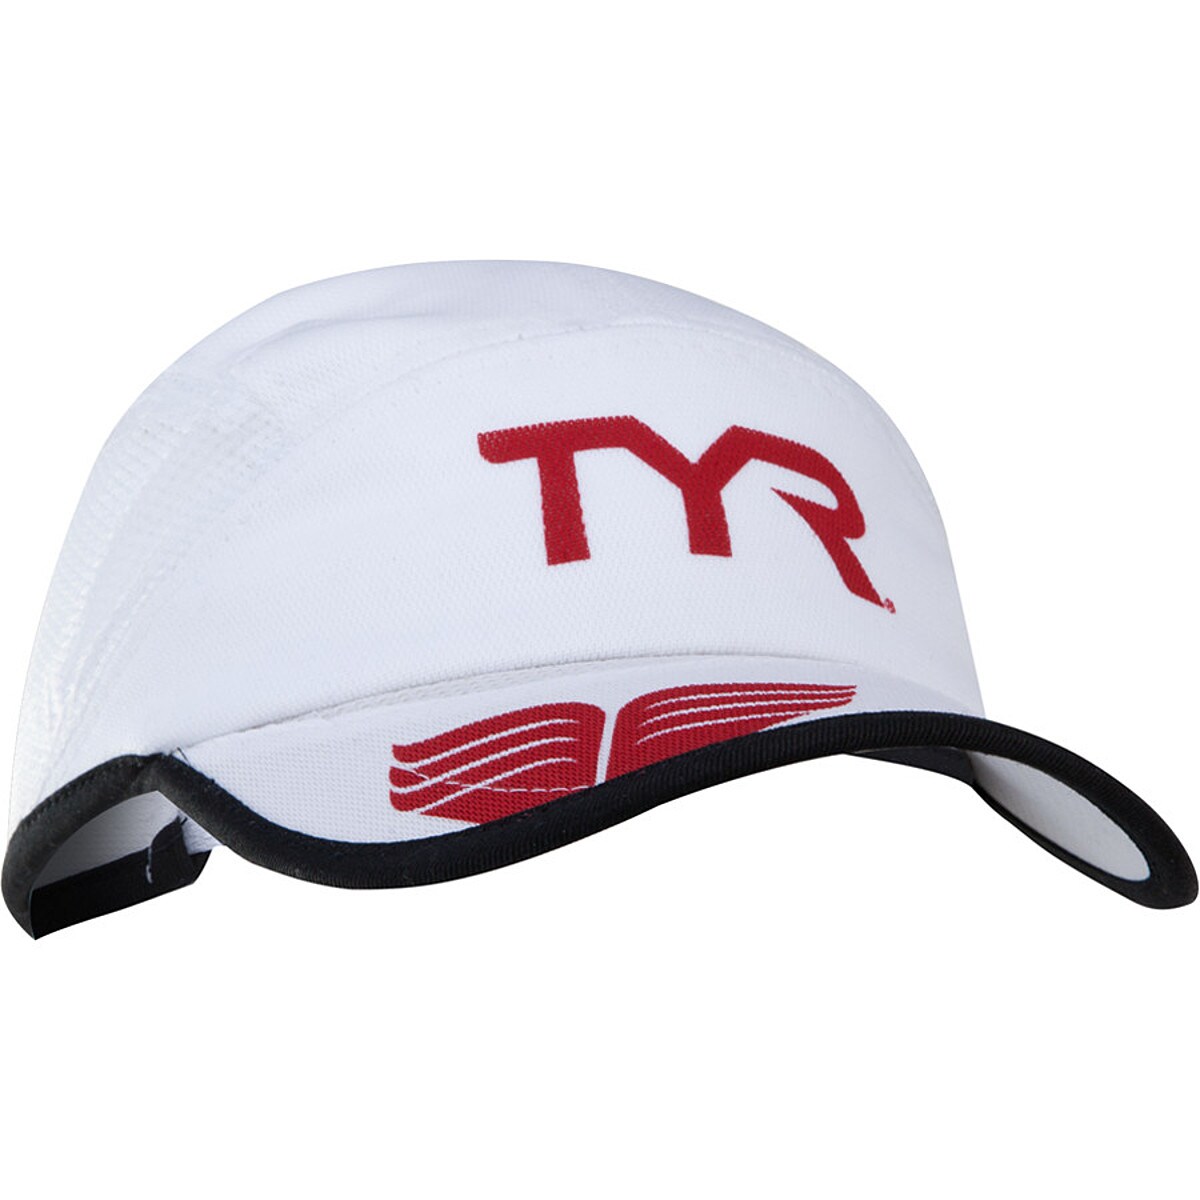 TYR Running Cap